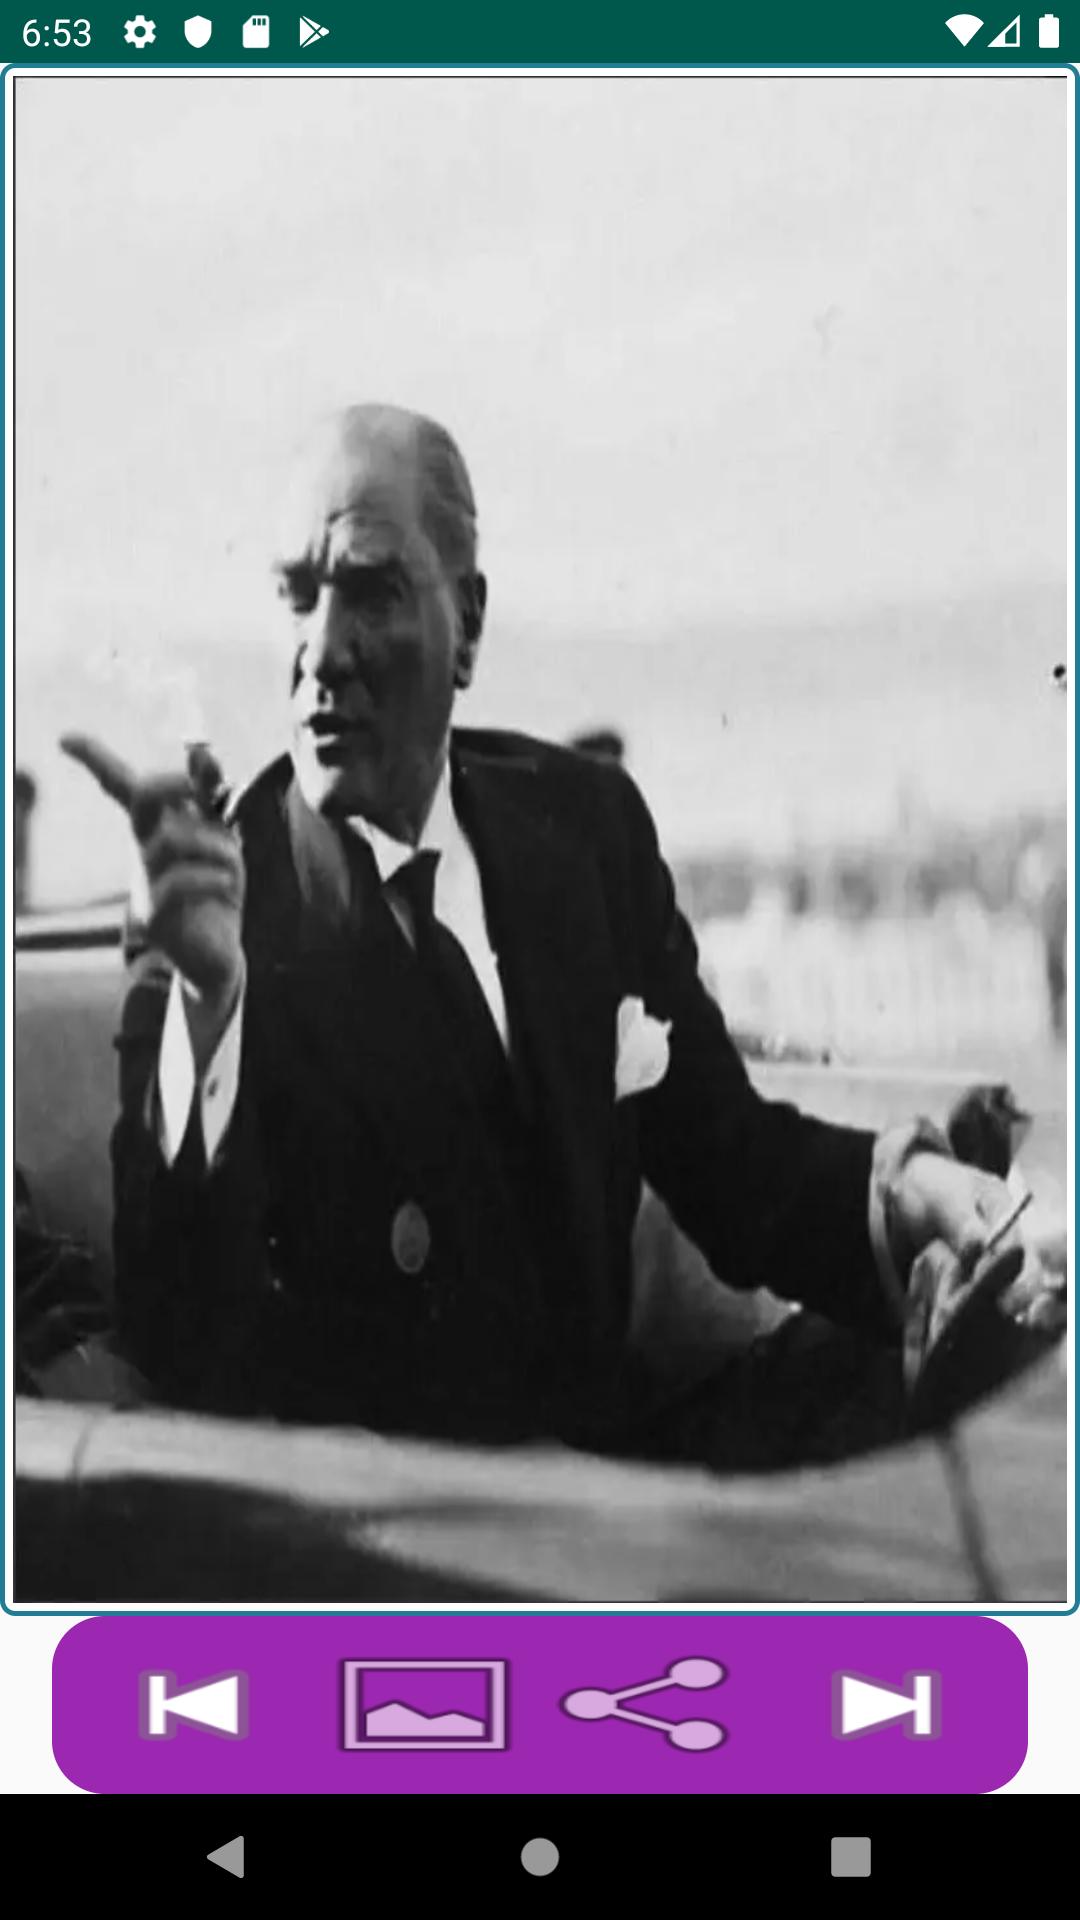 Ataturk Imzali Portre Uc Boyutlu Duvar Kagitlari Portre Poertre Resimleri Resim